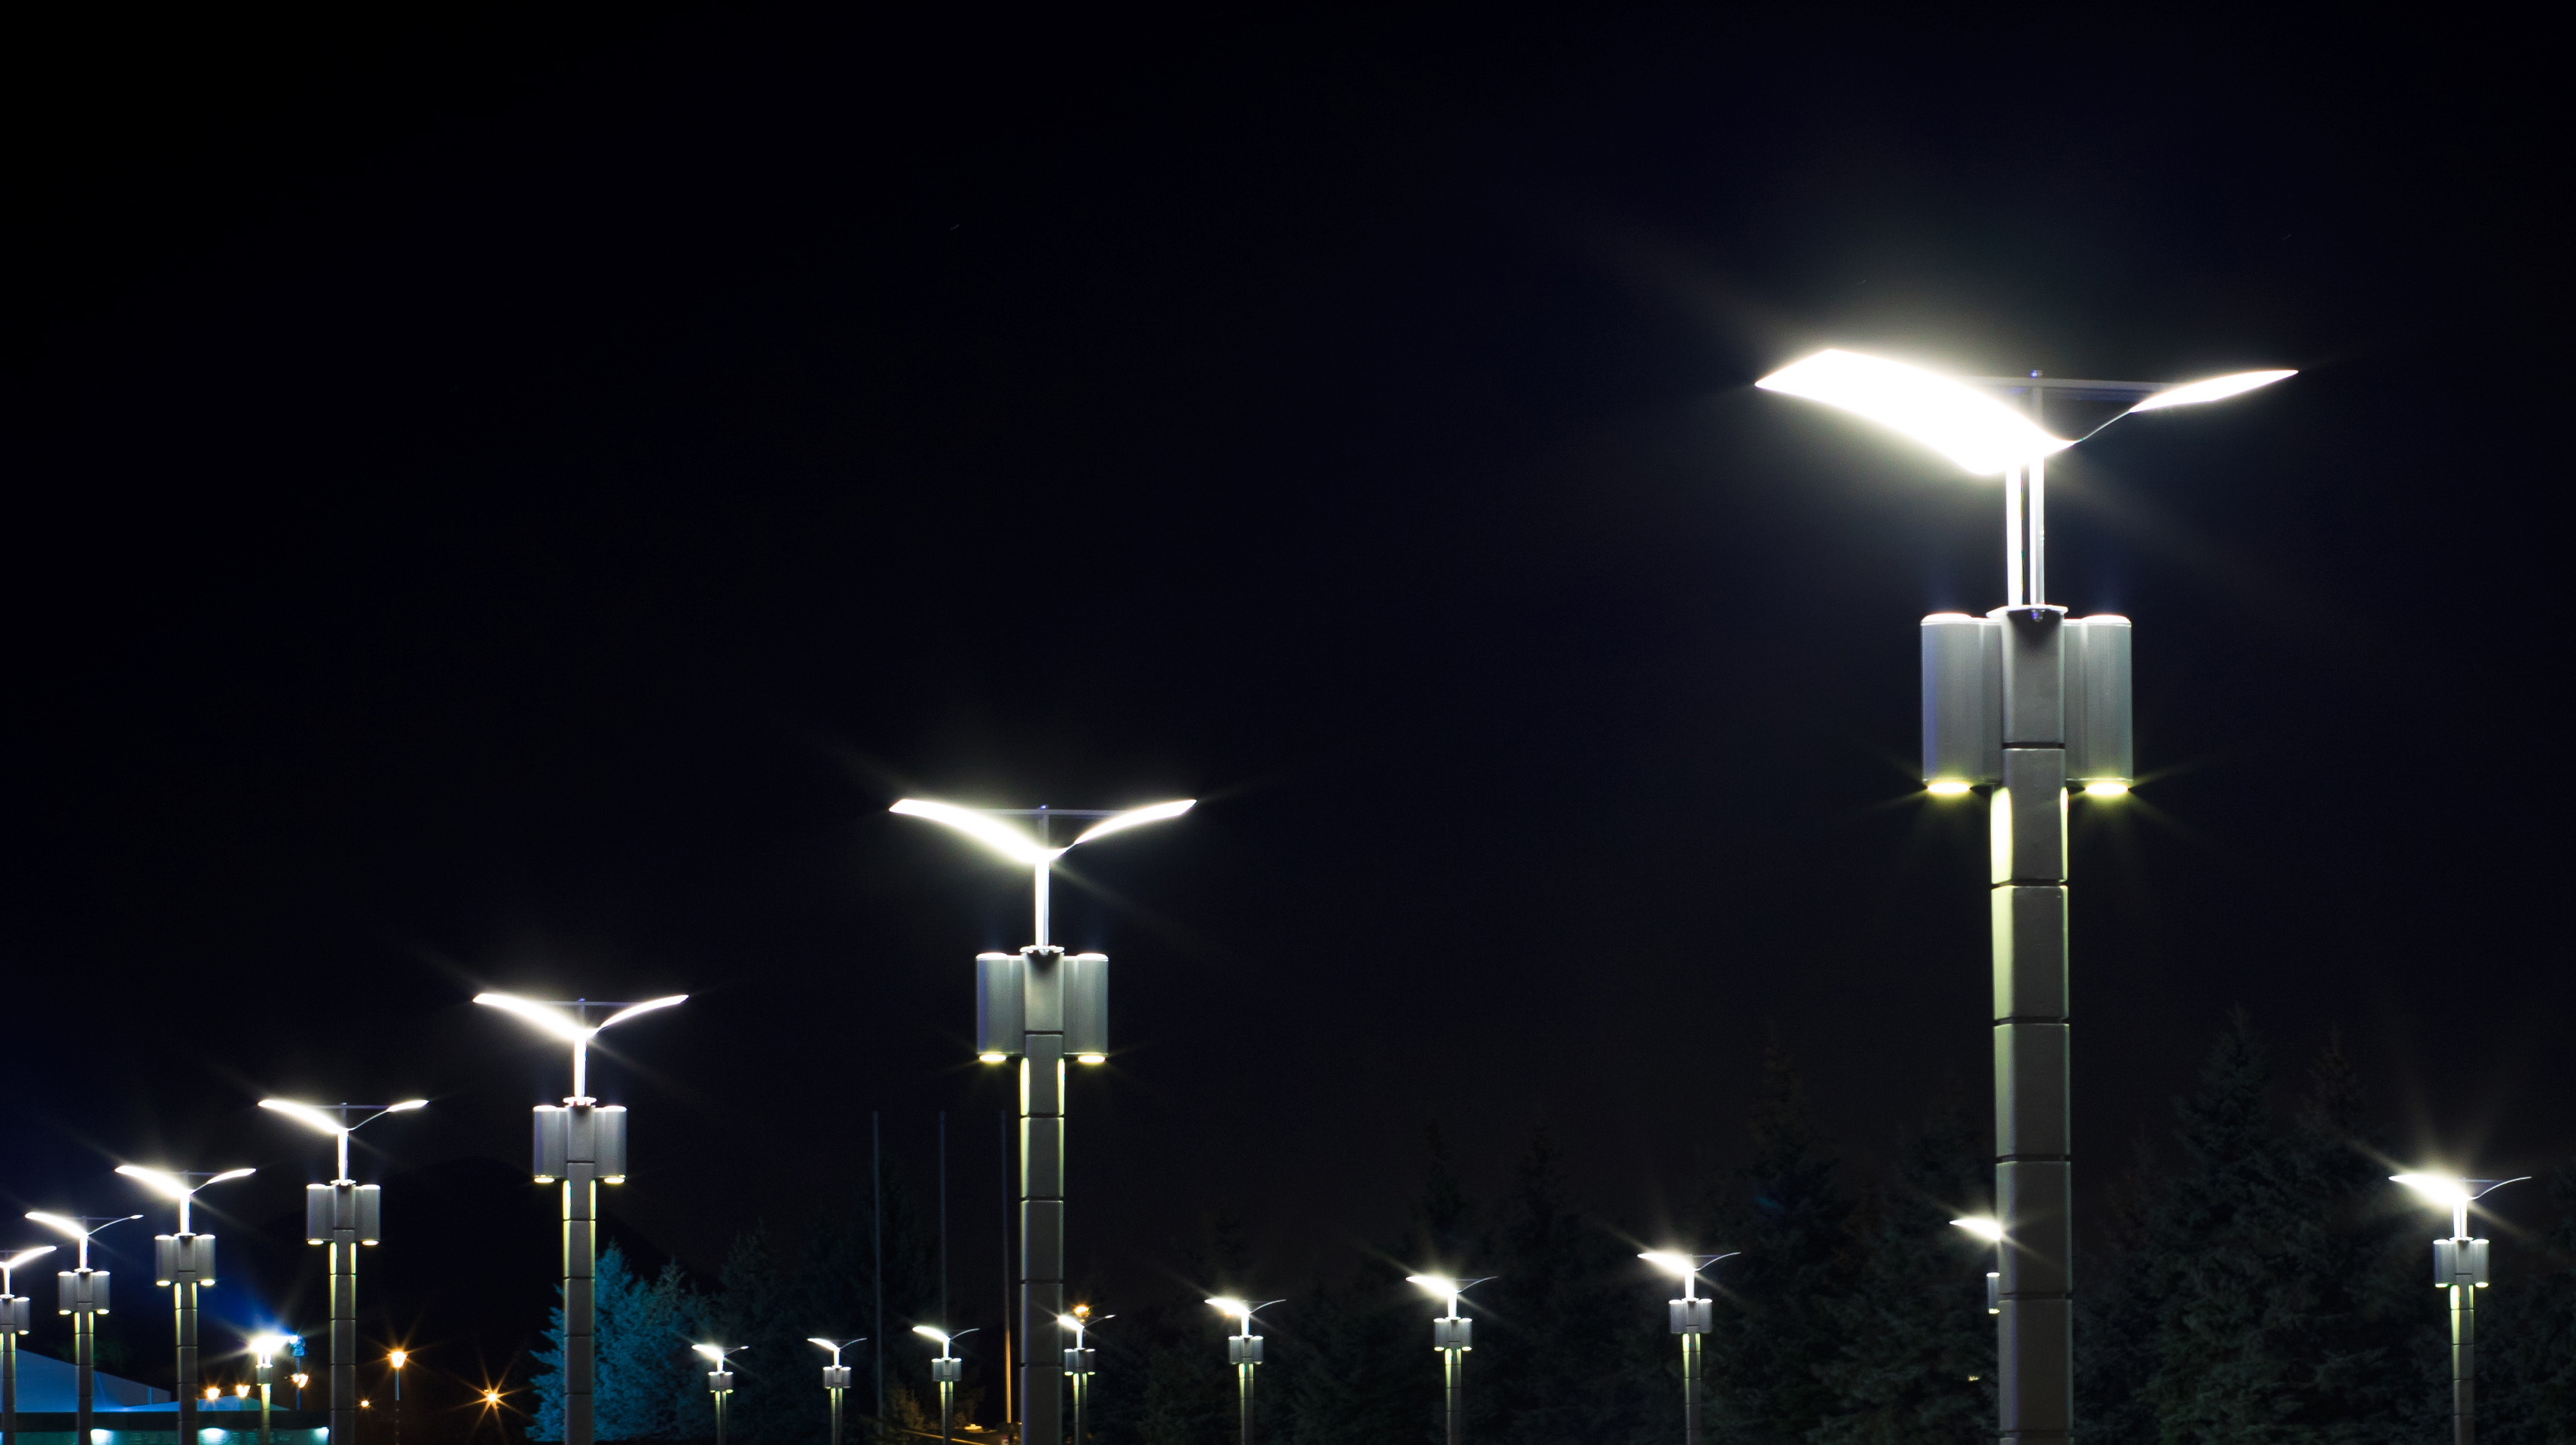 public Park infrastructure, night lighting